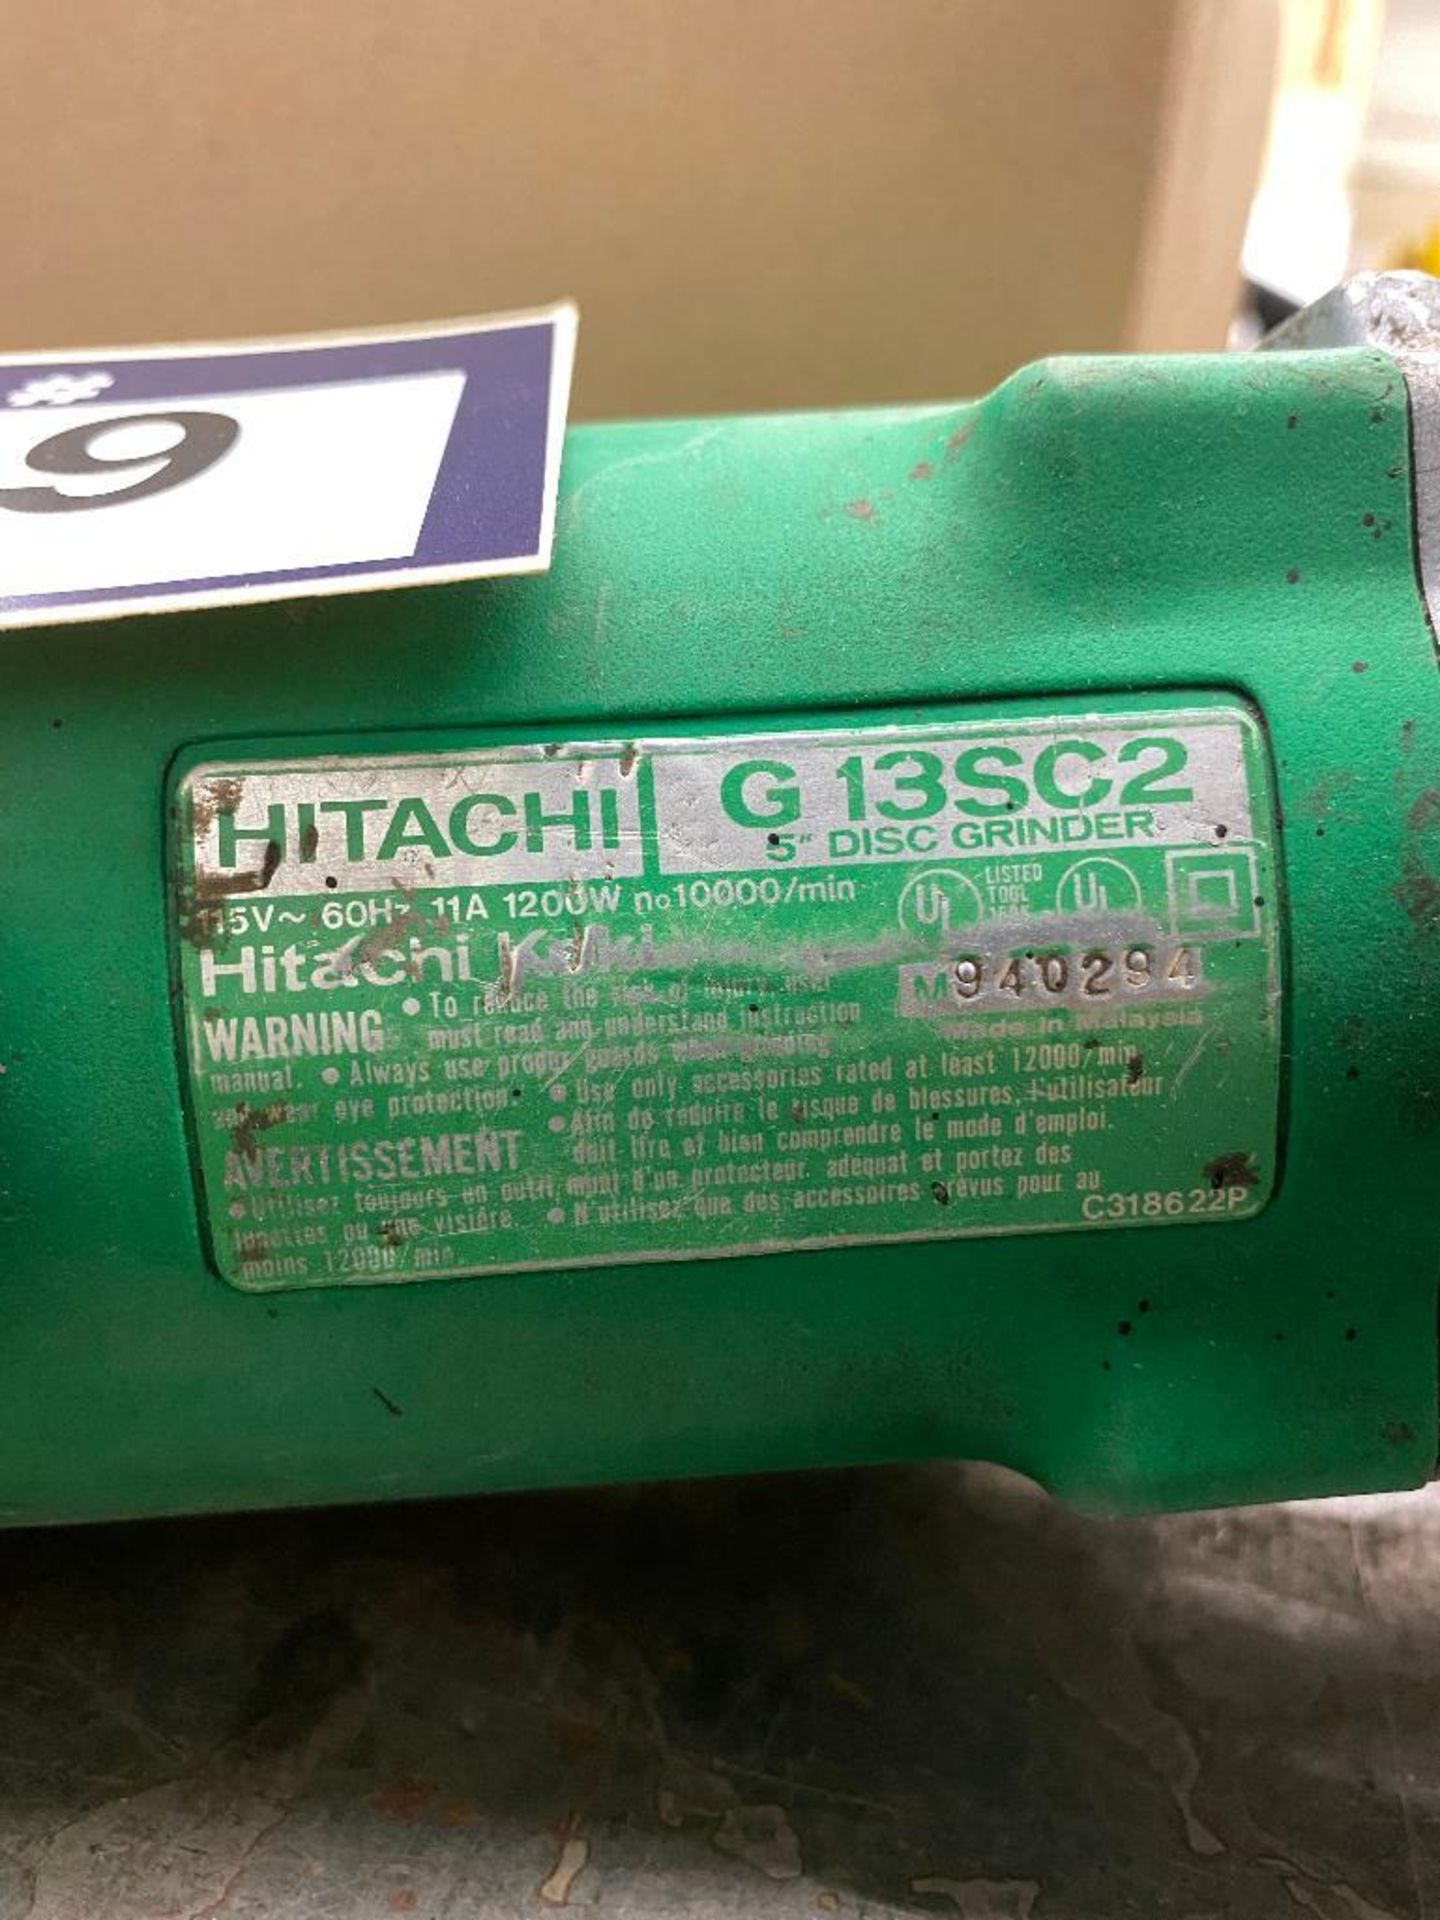 Hitachi G13SC2 5" Angle Grinder. - Image 2 of 2